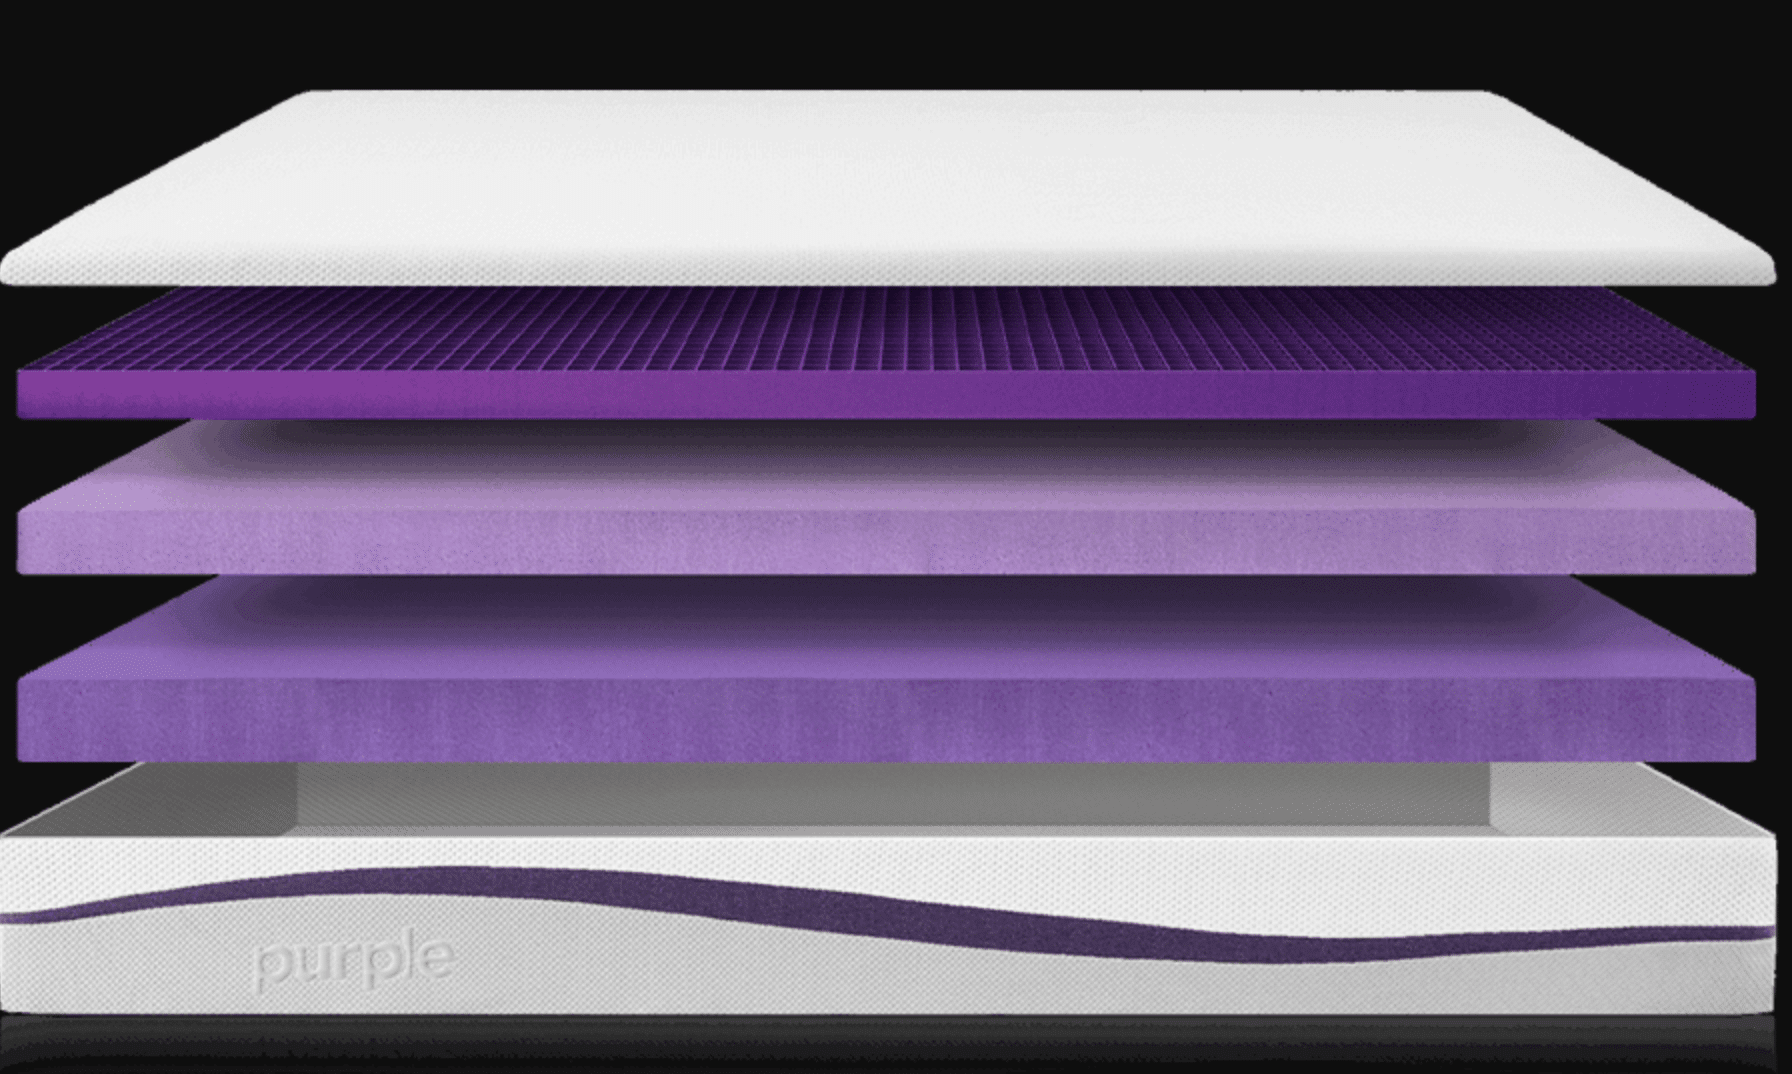 purple brand twin mattress